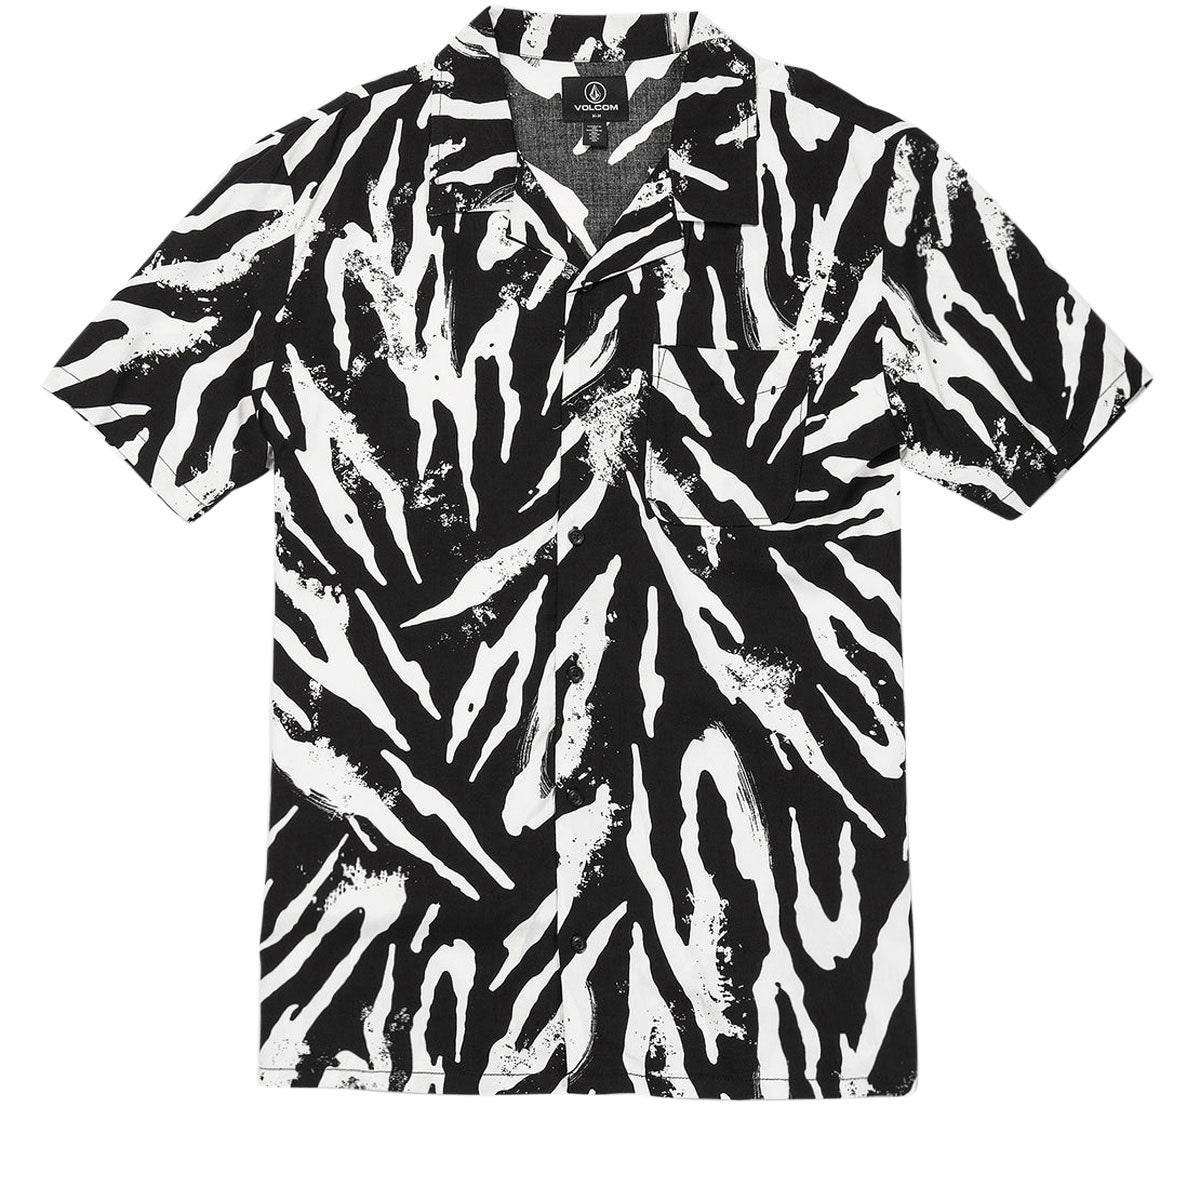 Volcom Stone Party Animals Shirt - Black image 2